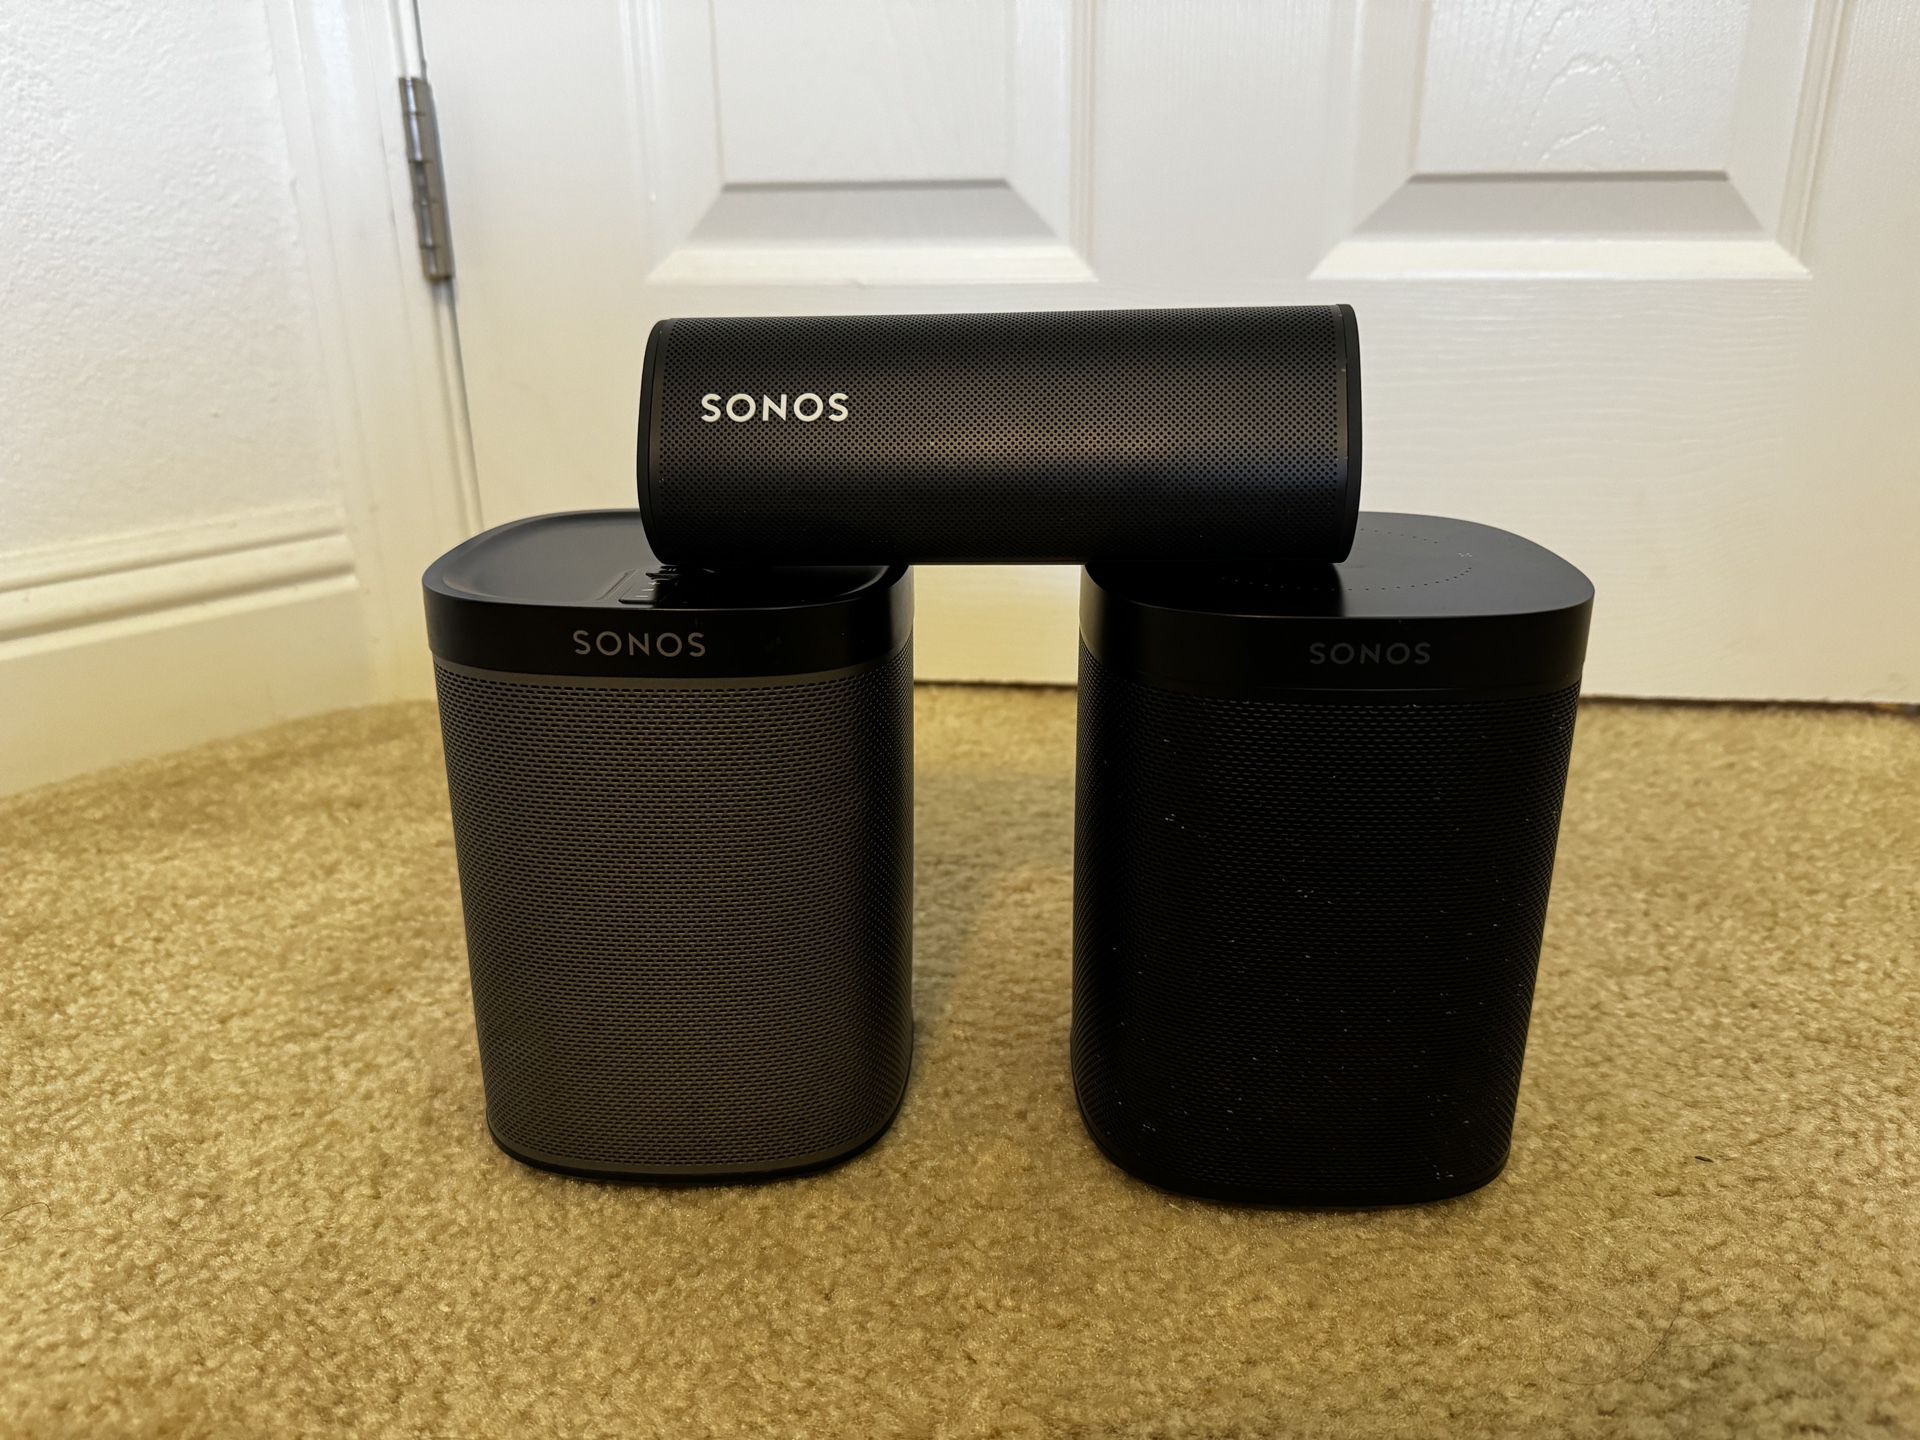 One (1) Sonos speaker lot: Sonos Roam